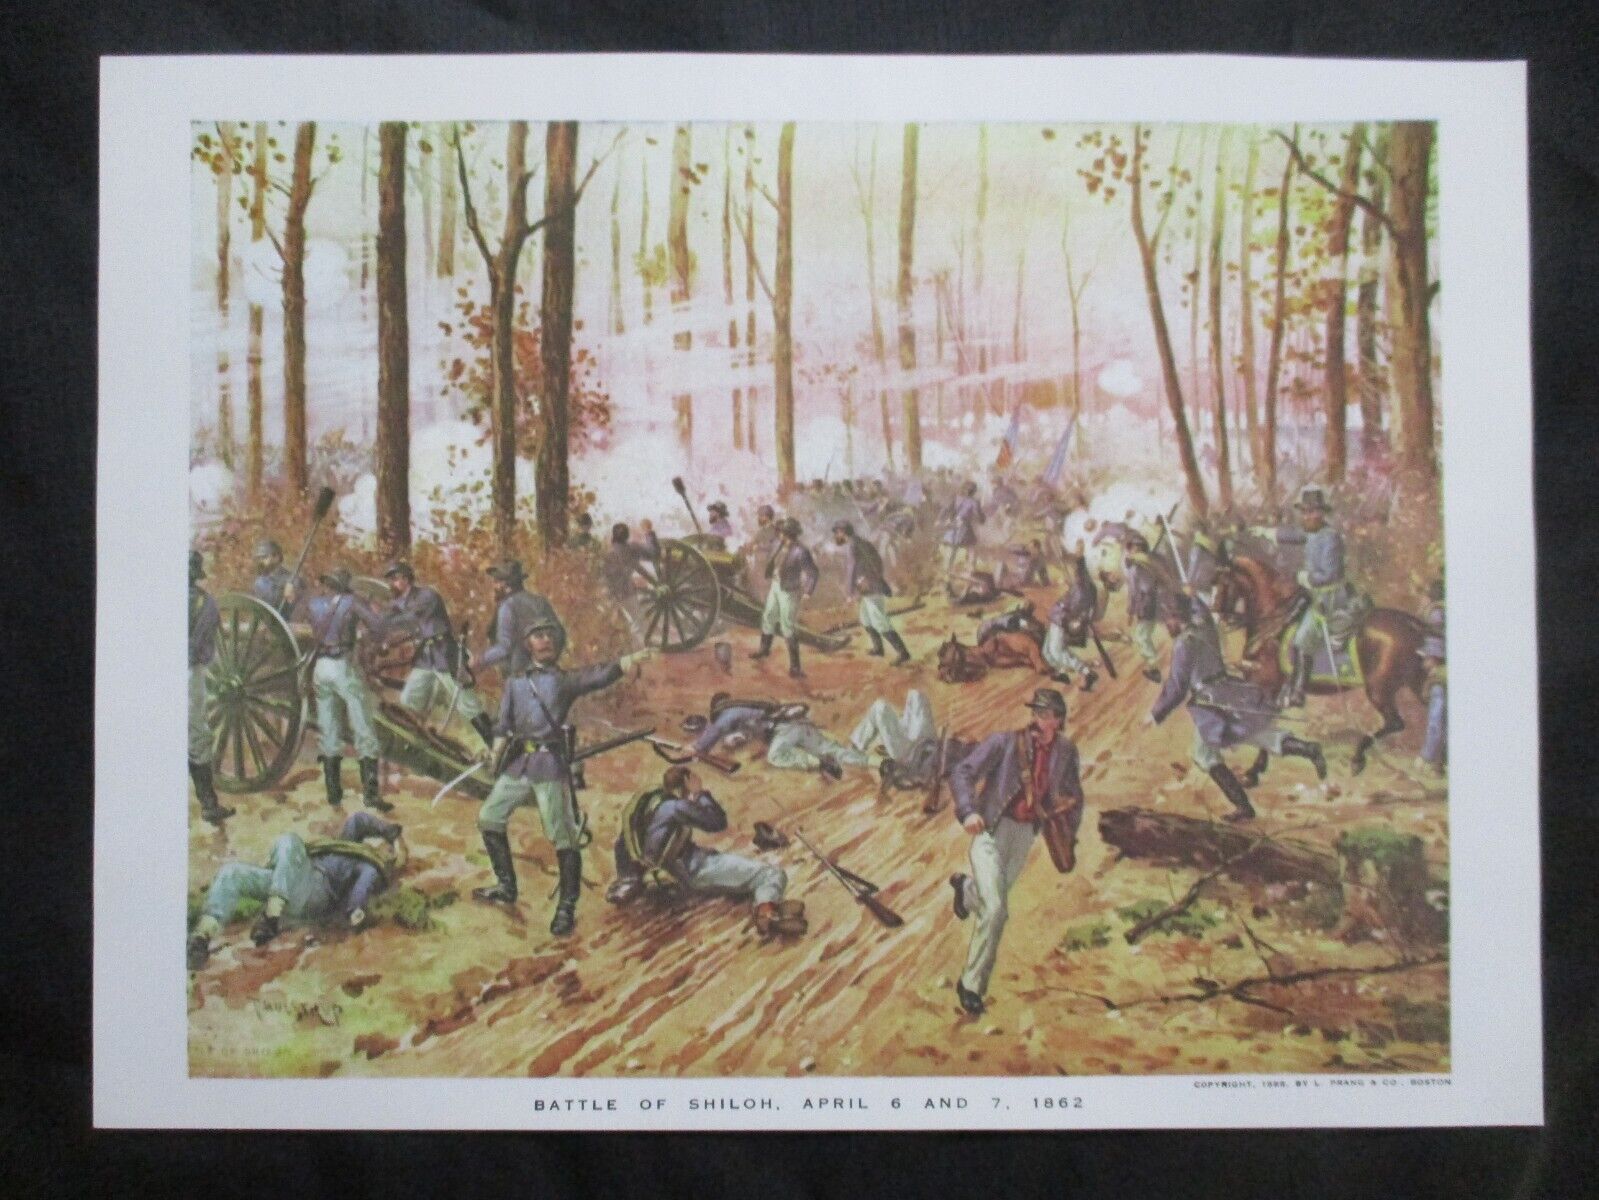 1960 Civil War Print - Battle of Shiloh, April 6 & 7, 1862, Tennessee - FRAME IT